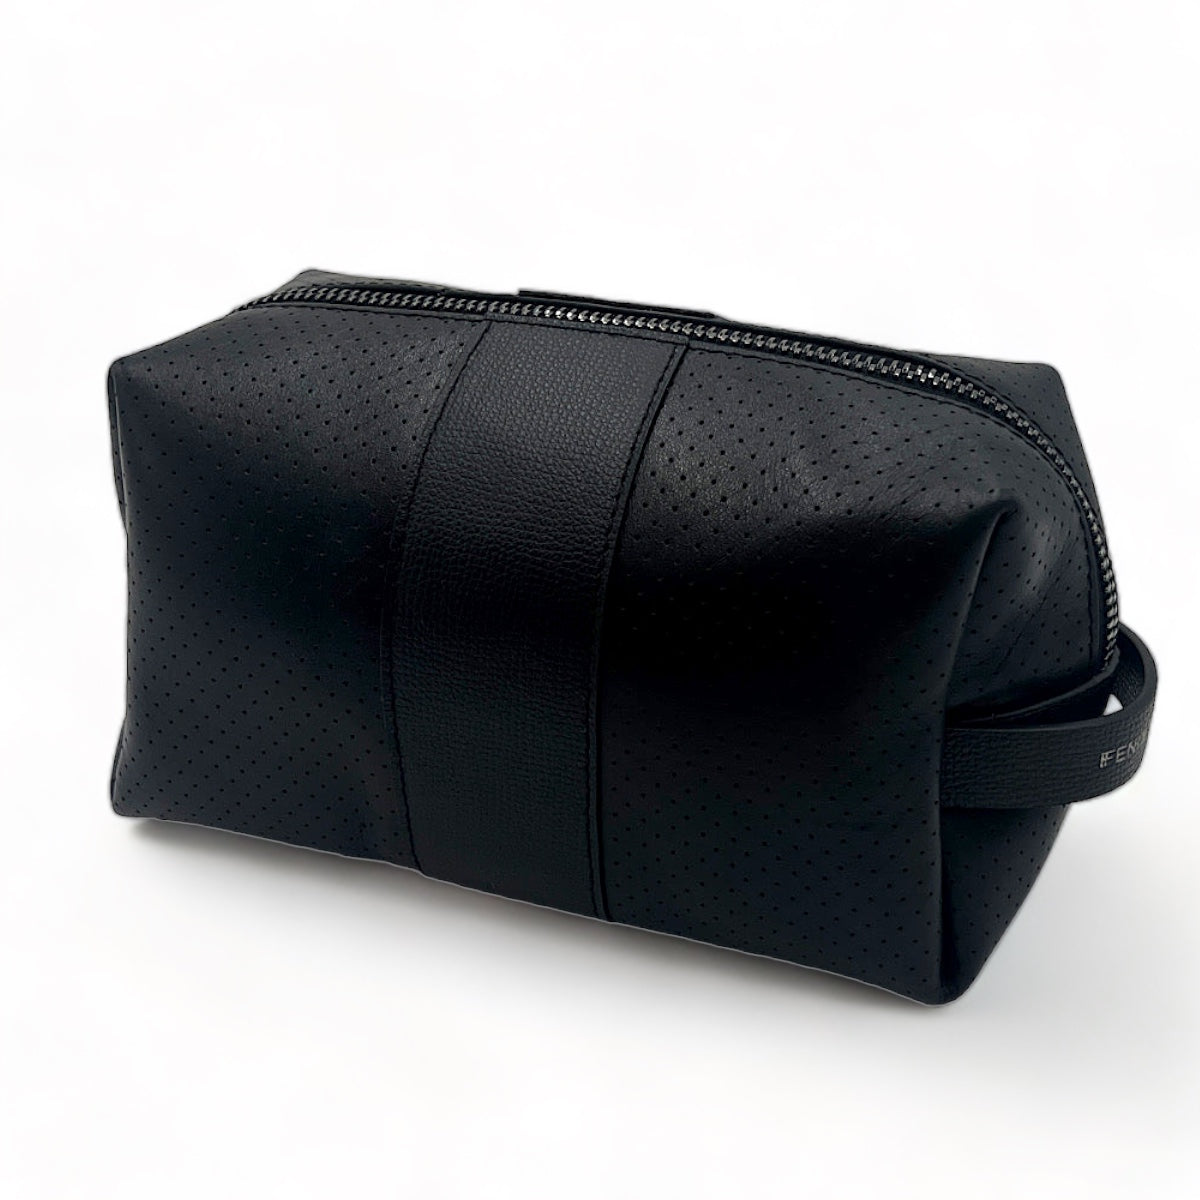 24/7 Bag - Black Leather/Gunmetal Zipper